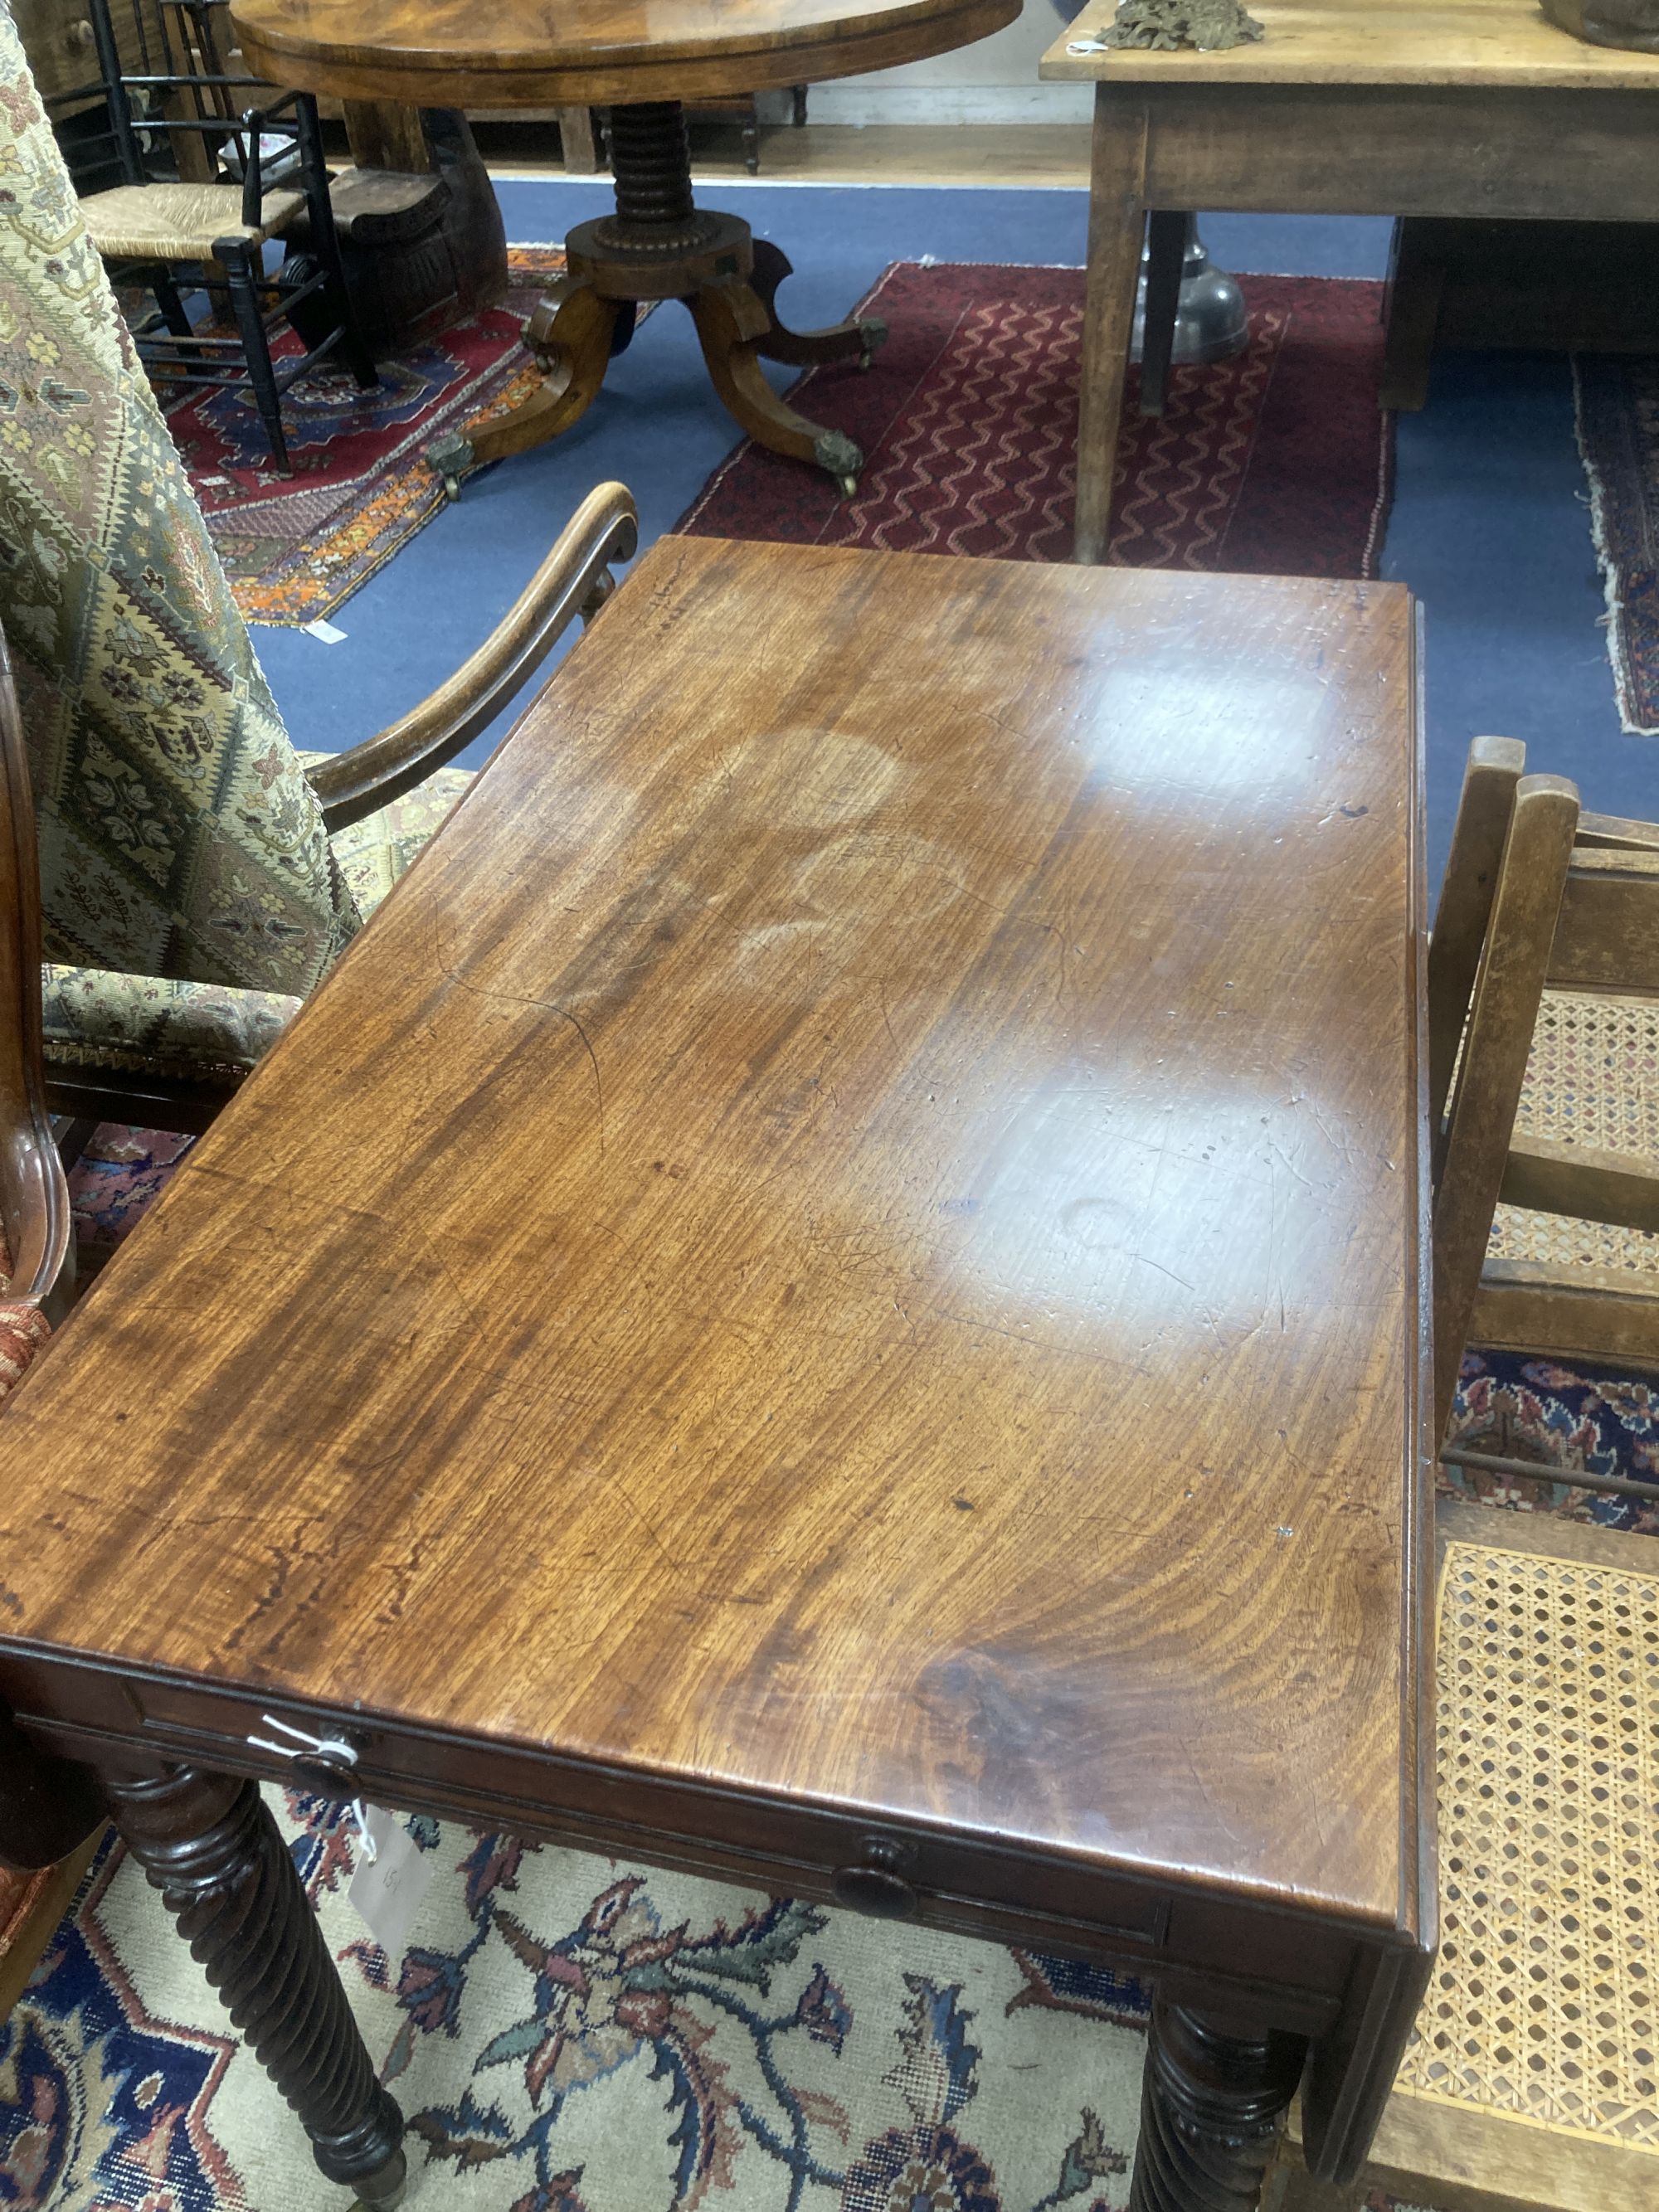 A Regency mahogany Pembroke table, width 91cm, depth 54cm, height 72cm